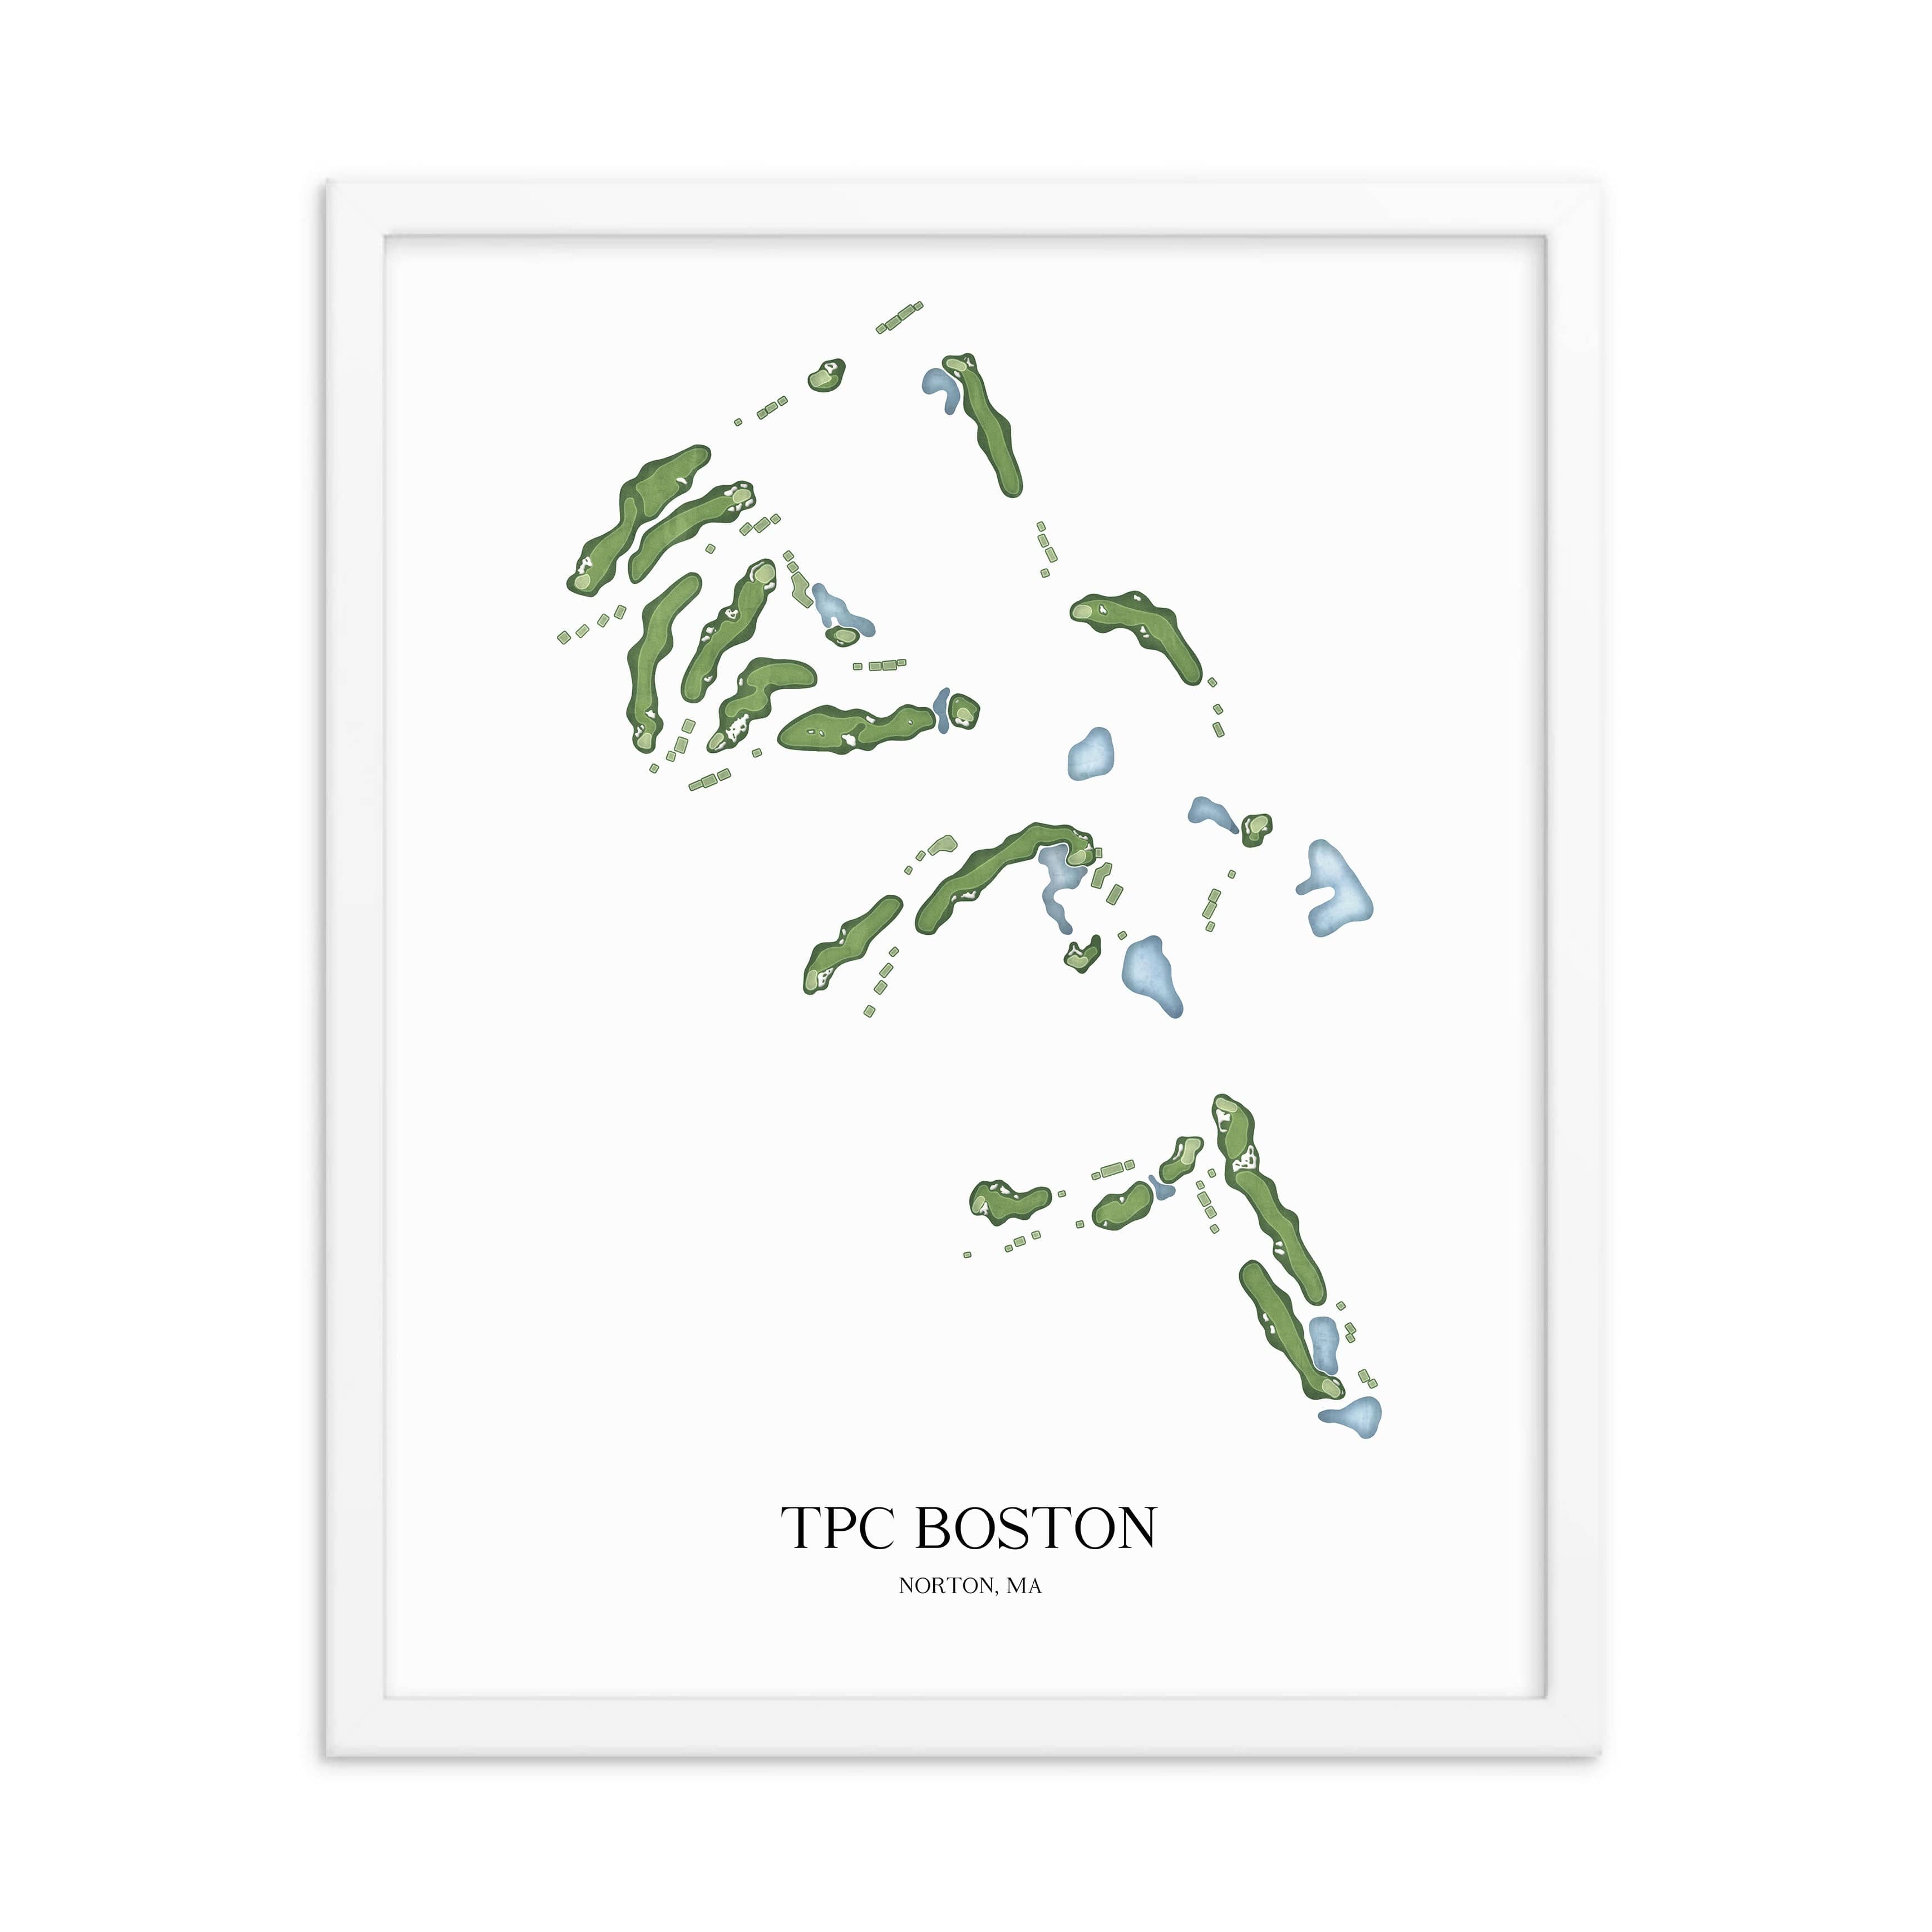 The 19th Hole Golf Shop - Golf Course Prints -  TPC Boston Golf Course Map